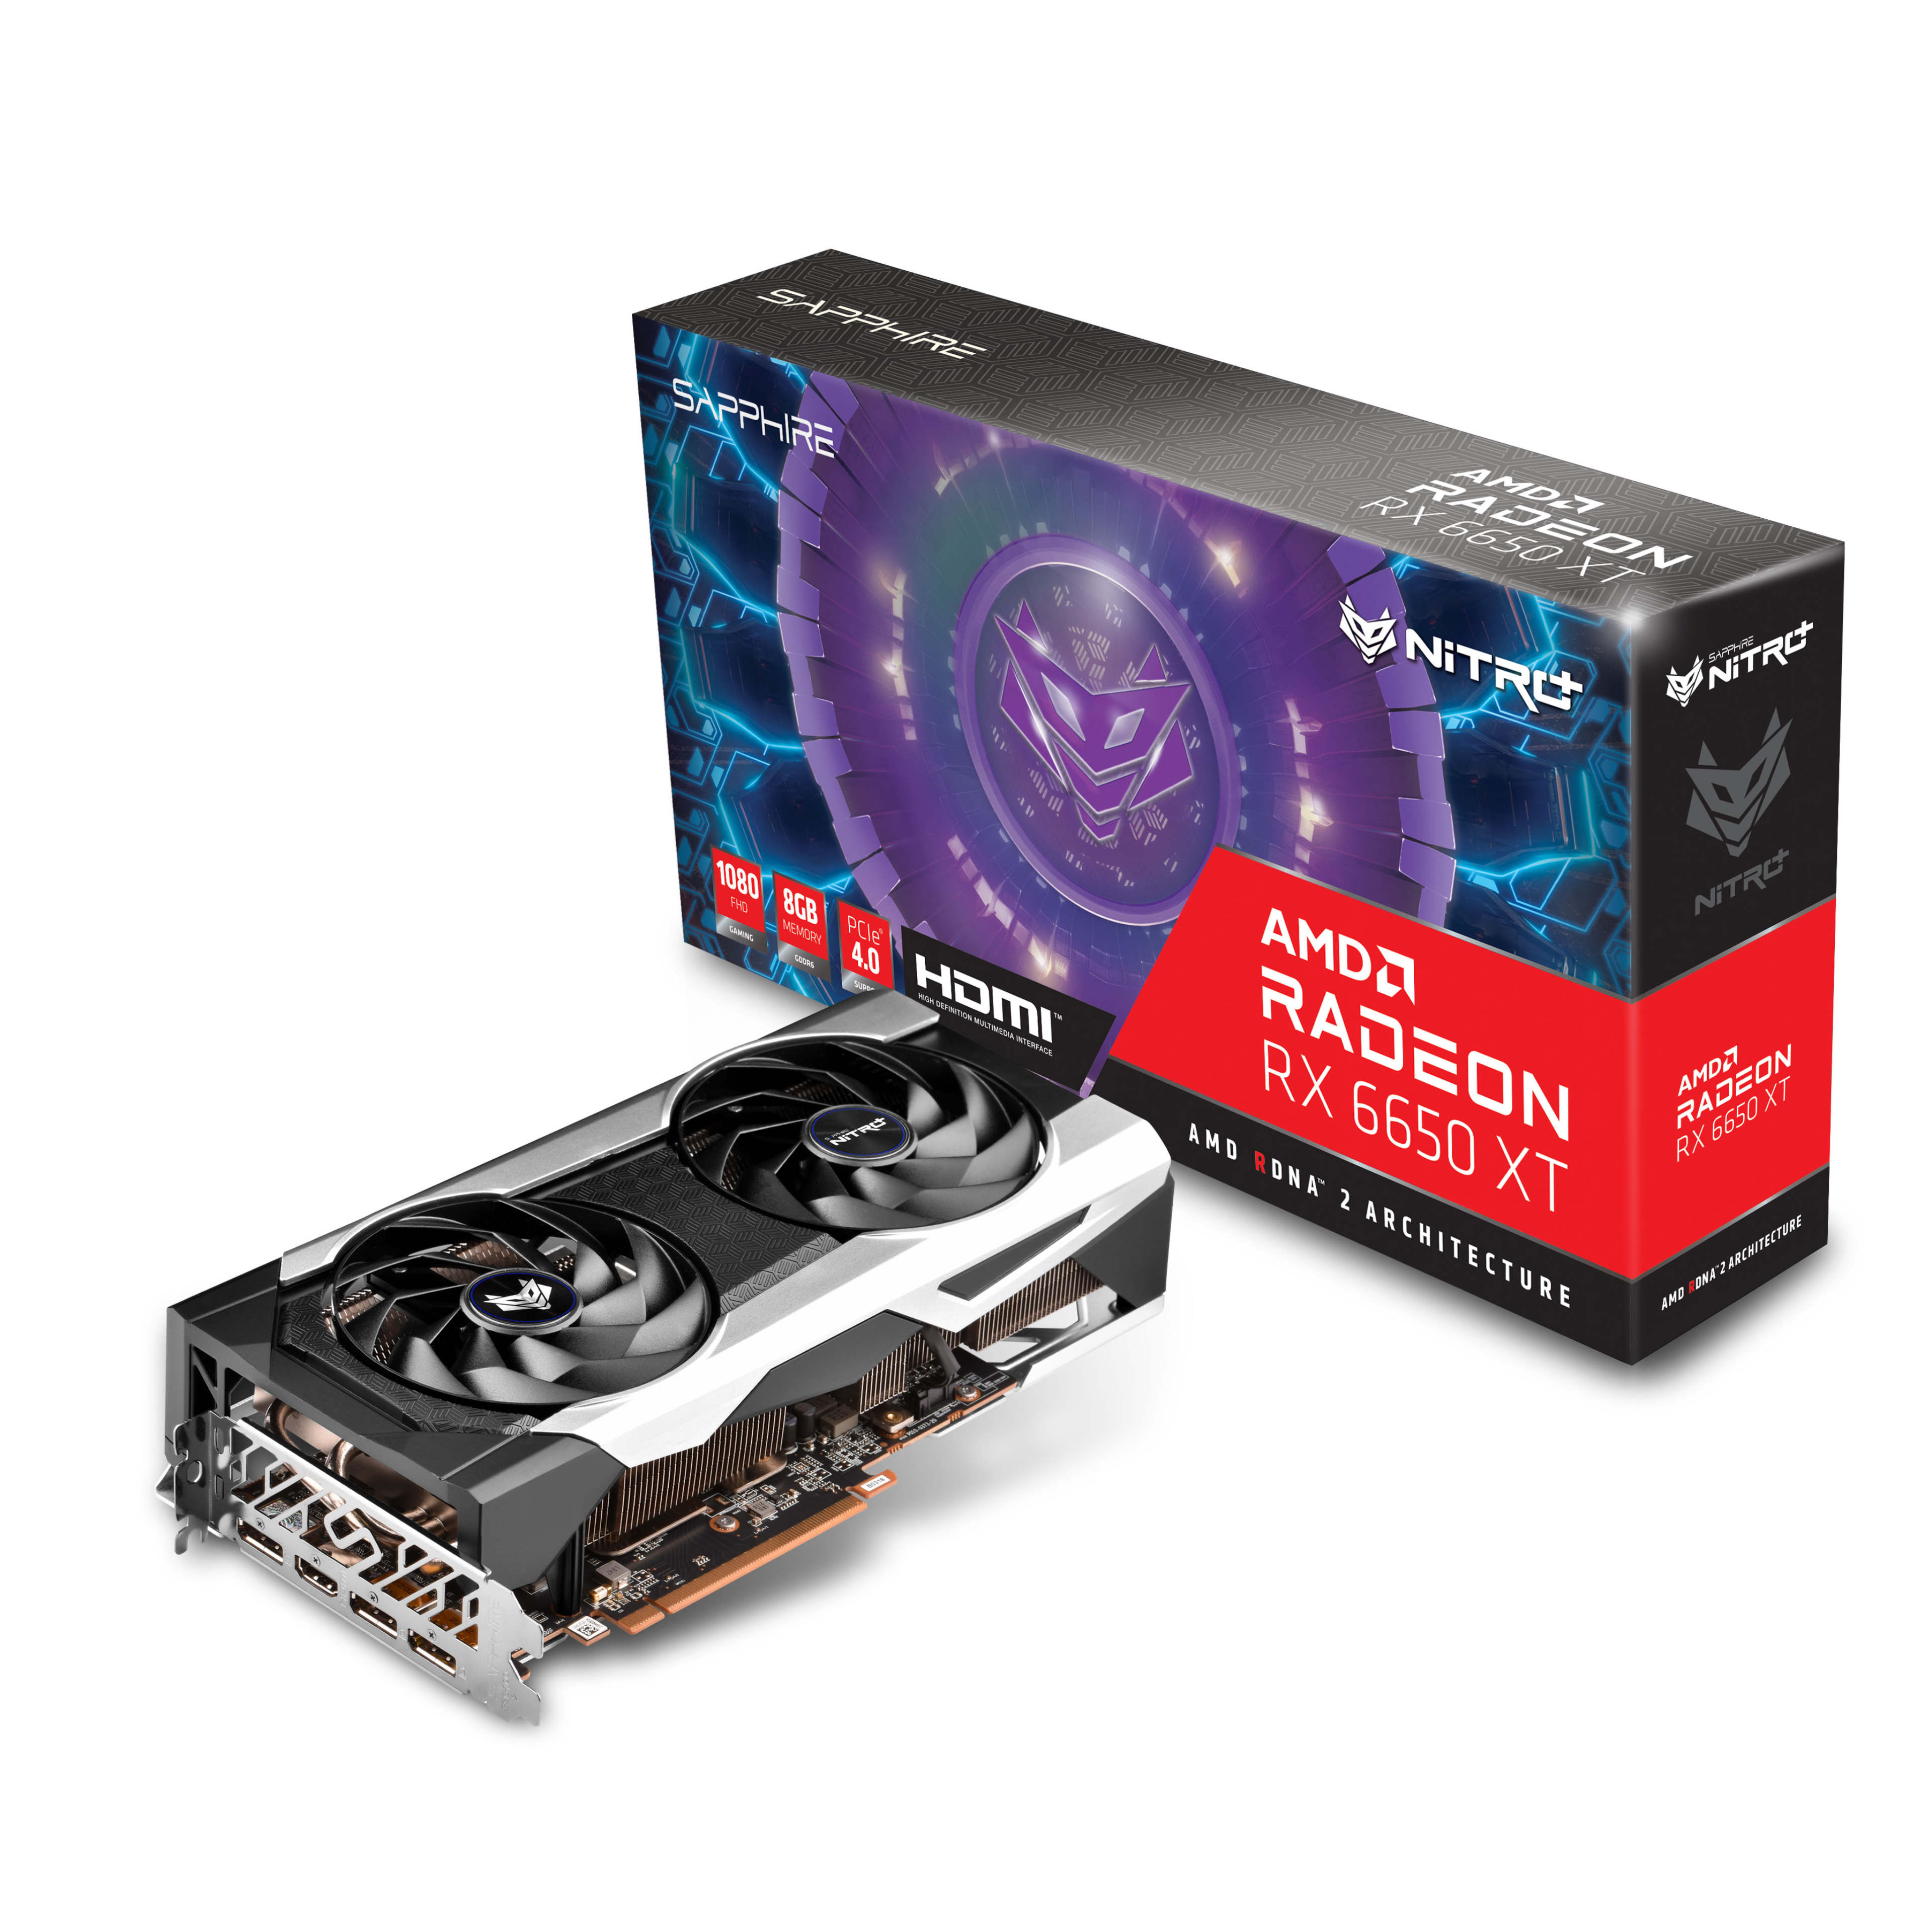 Sapphire Nitro+ Radeon RX 6650 XT Desktop-GPU Review: a powerful 1080p  graphics card with a good cooler -  Reviews